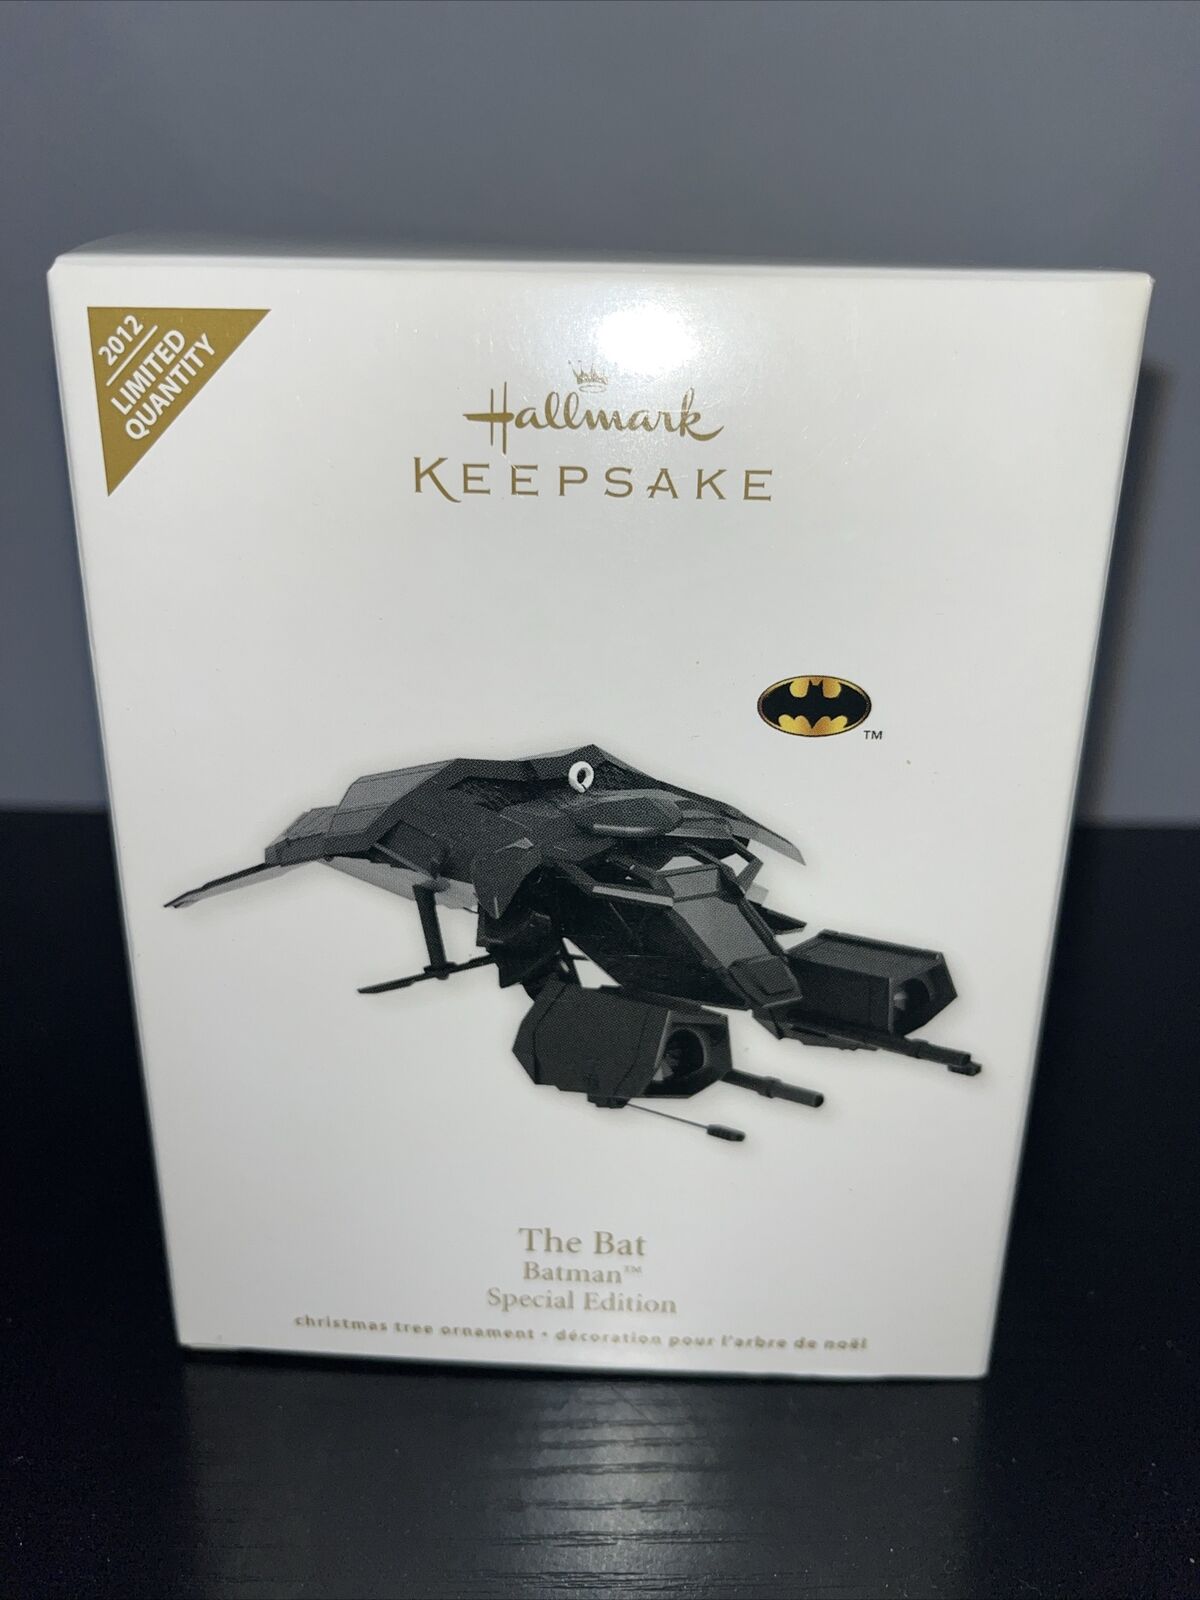 2012 Hallmark Keepsake The Bat Batman Limited Special Edition Ornament